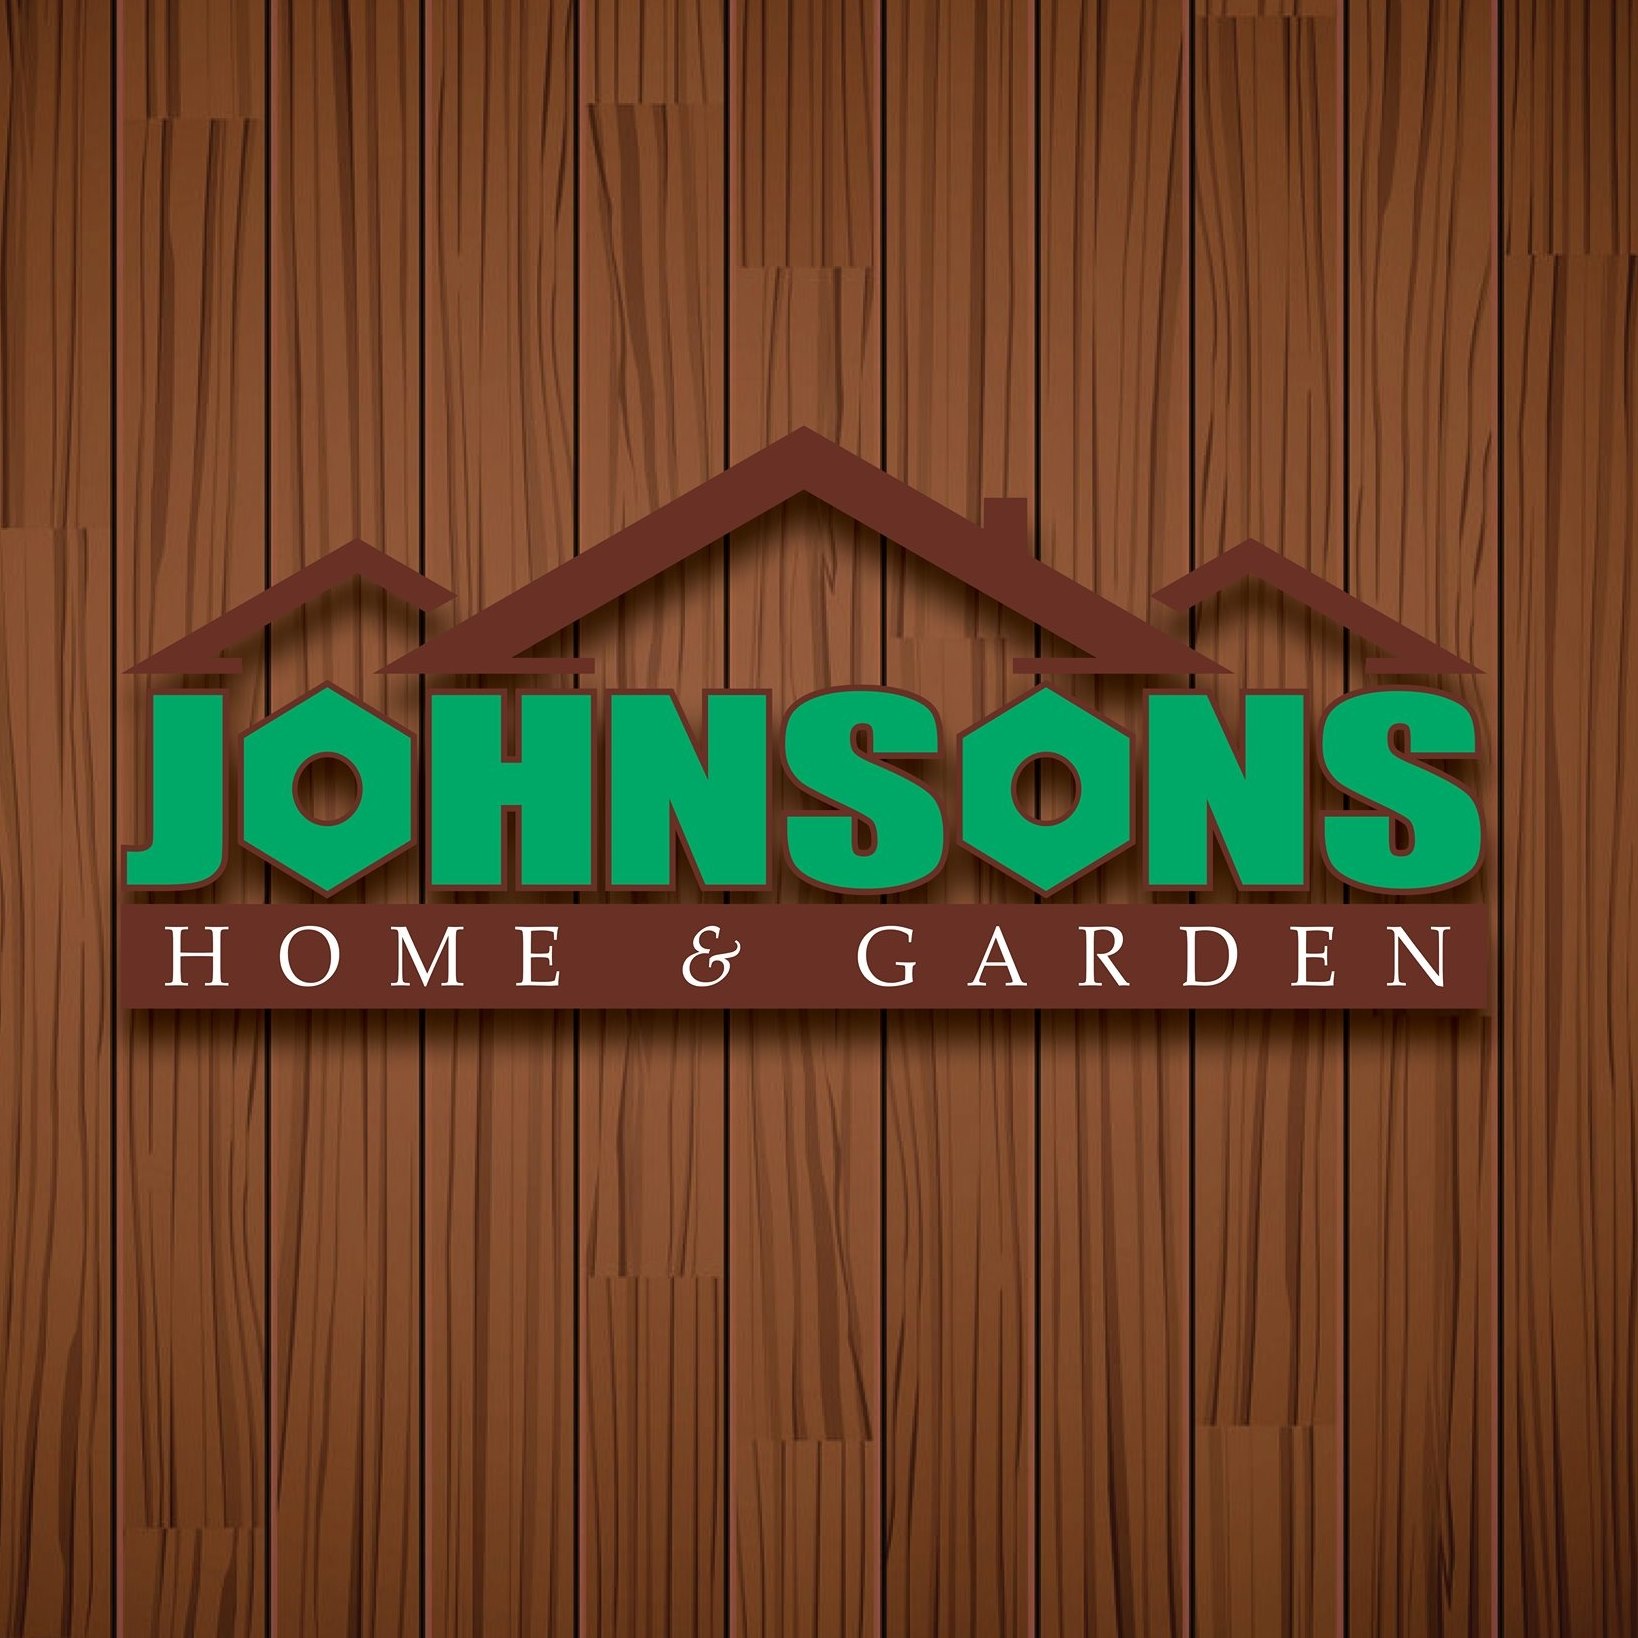 Business logo of Johnsons Home & Garden